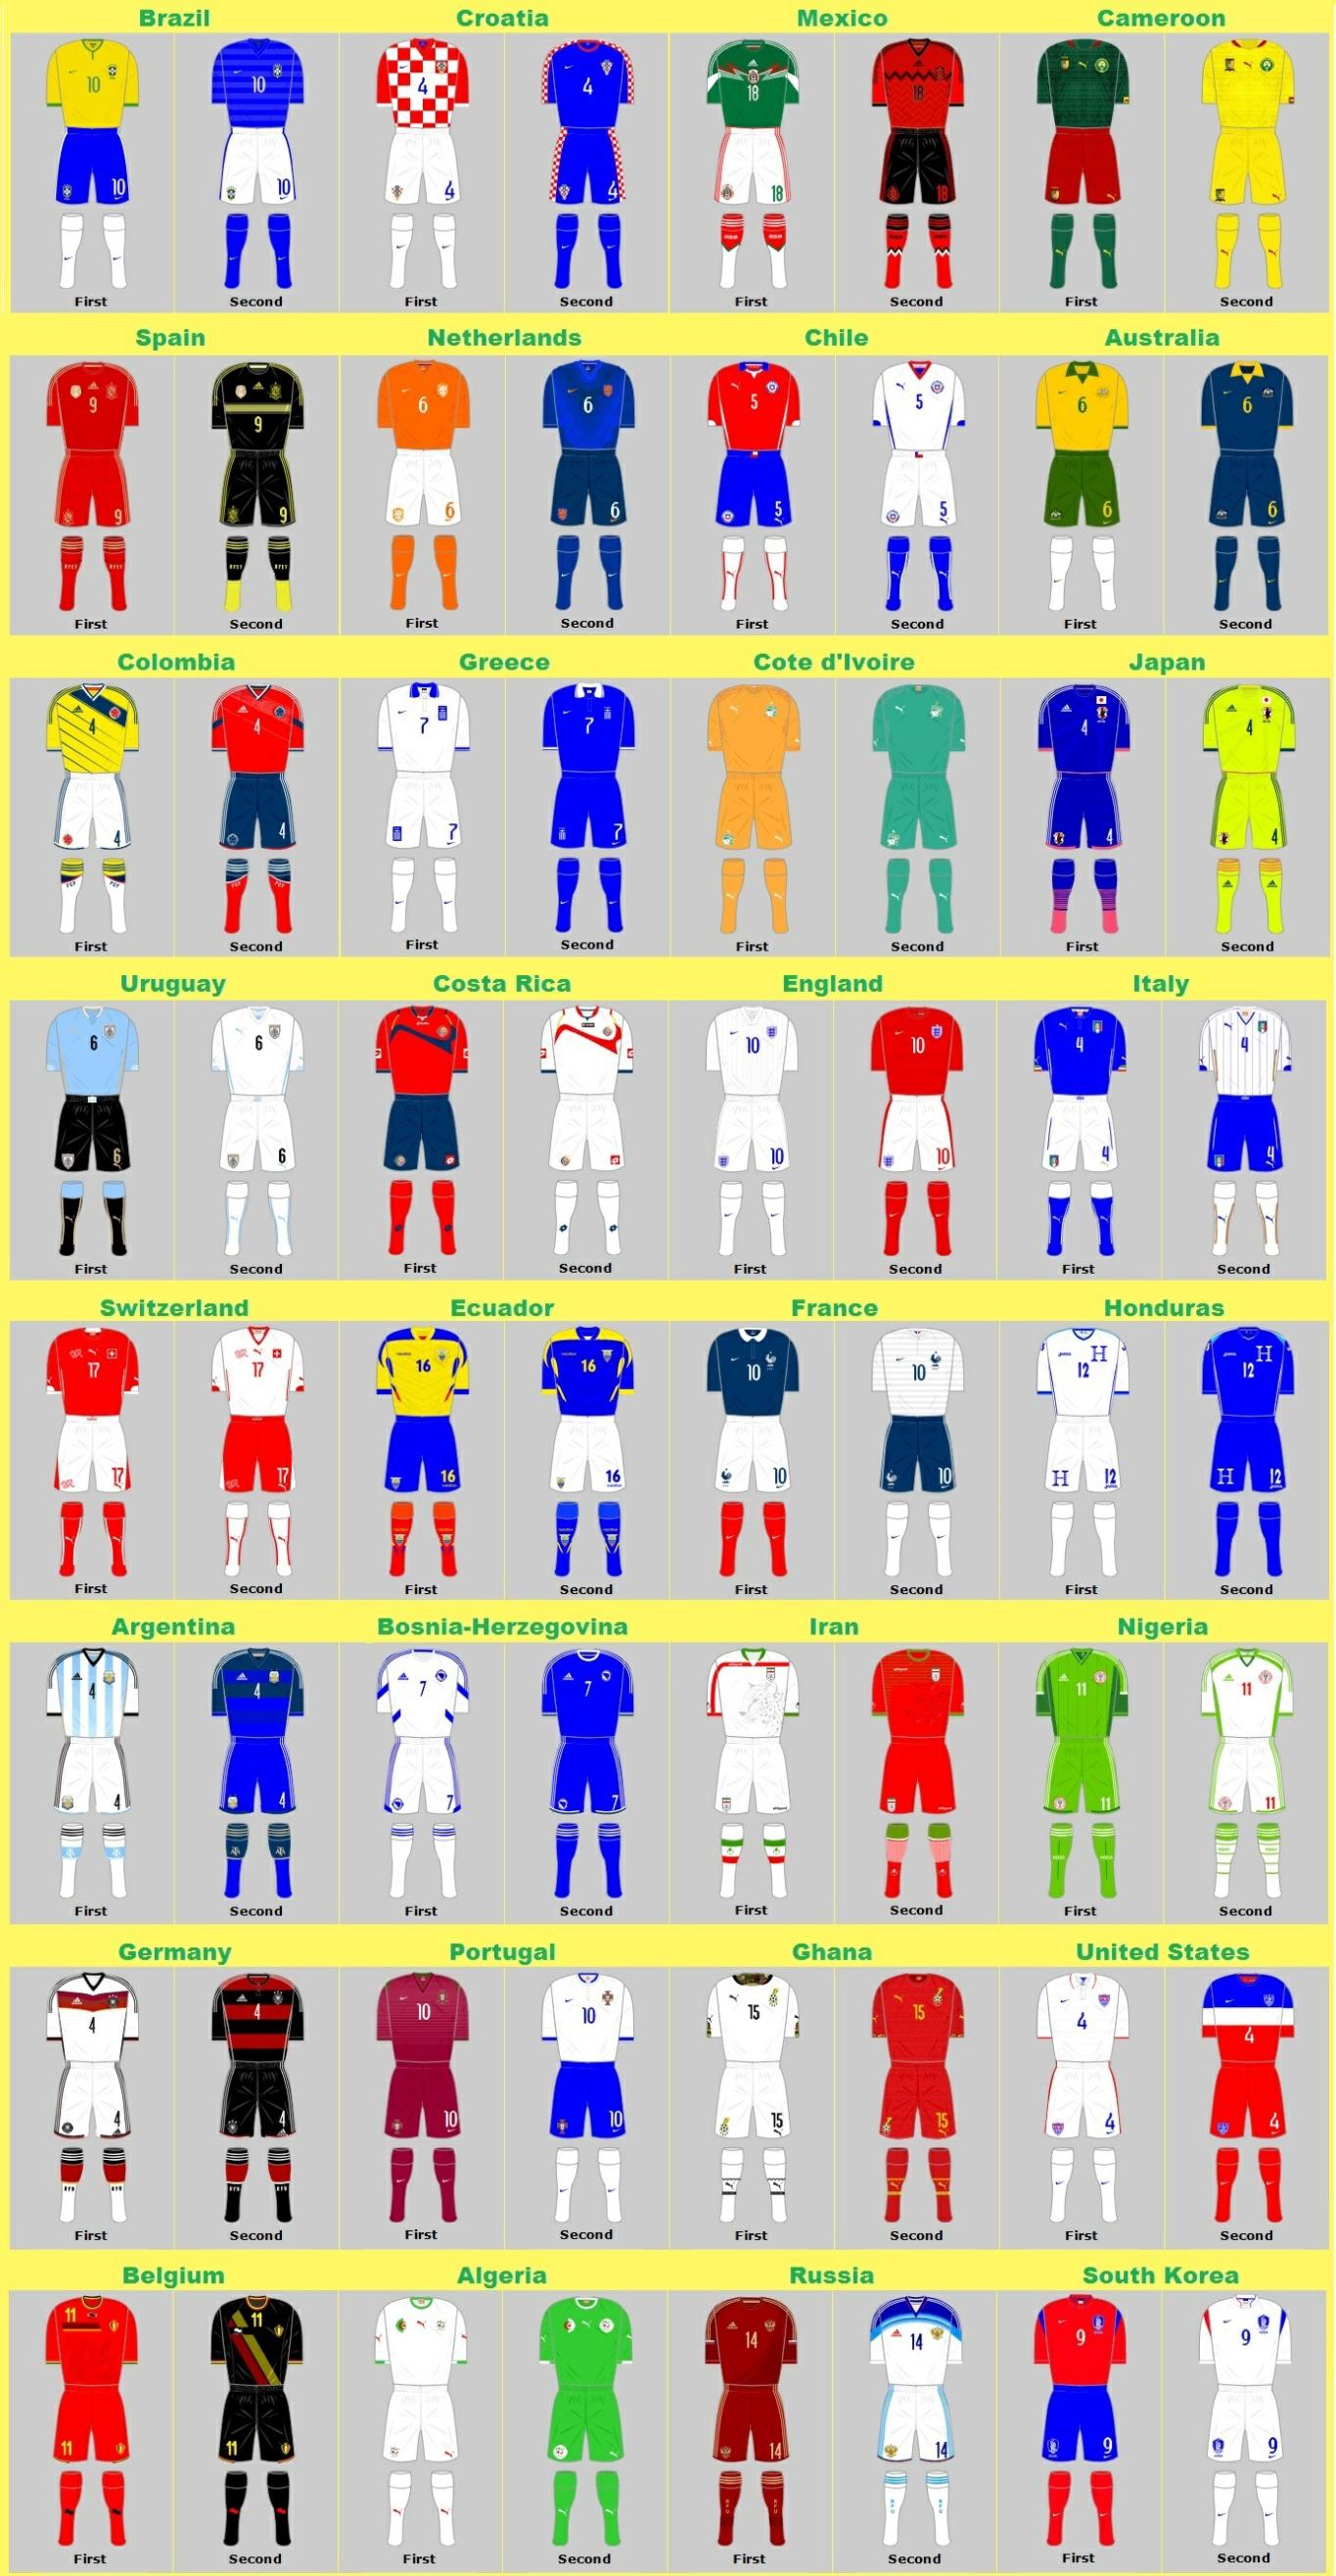 FIFA World Cup Kits 2014